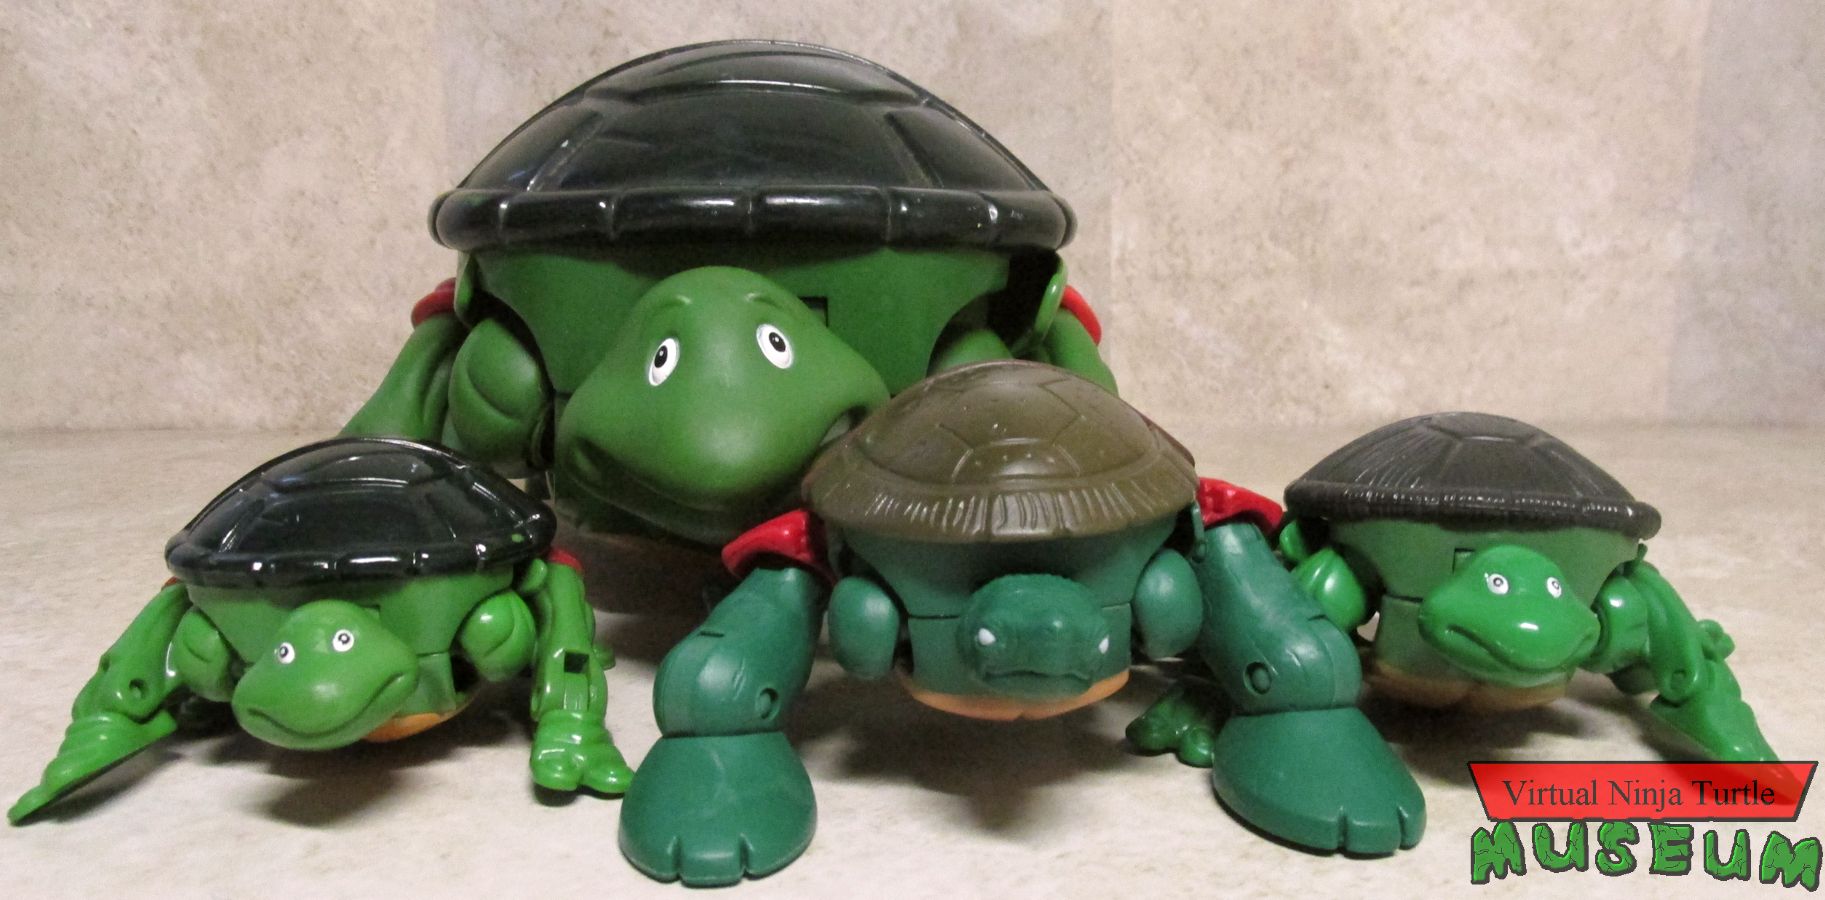 Mutating Raphael turtle forms